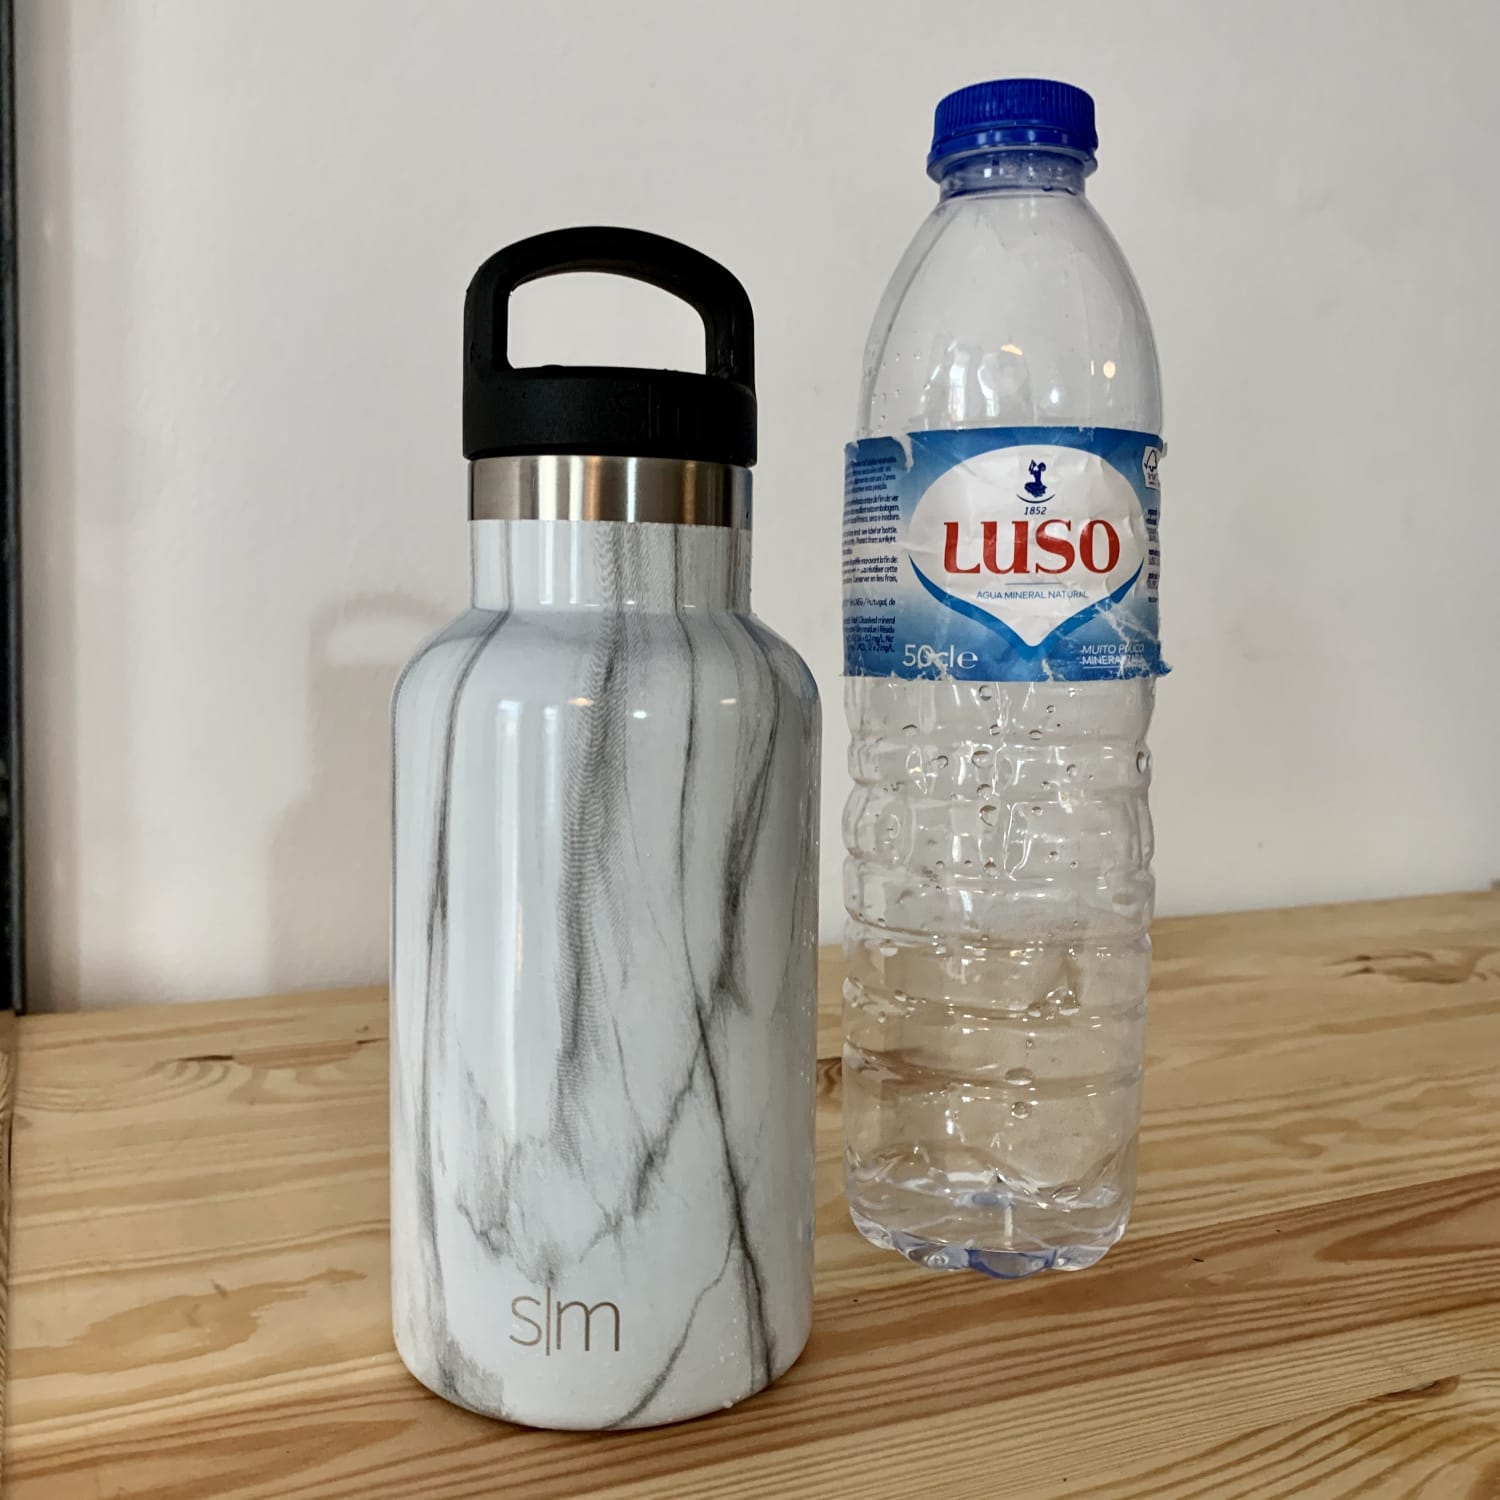 https://media-cldnry.s-nbcnews.com/image/upload/newscms/2020_34/1602336/plastic_vs-_reusable-simple_modern_water_bottle_review-190820.jpg